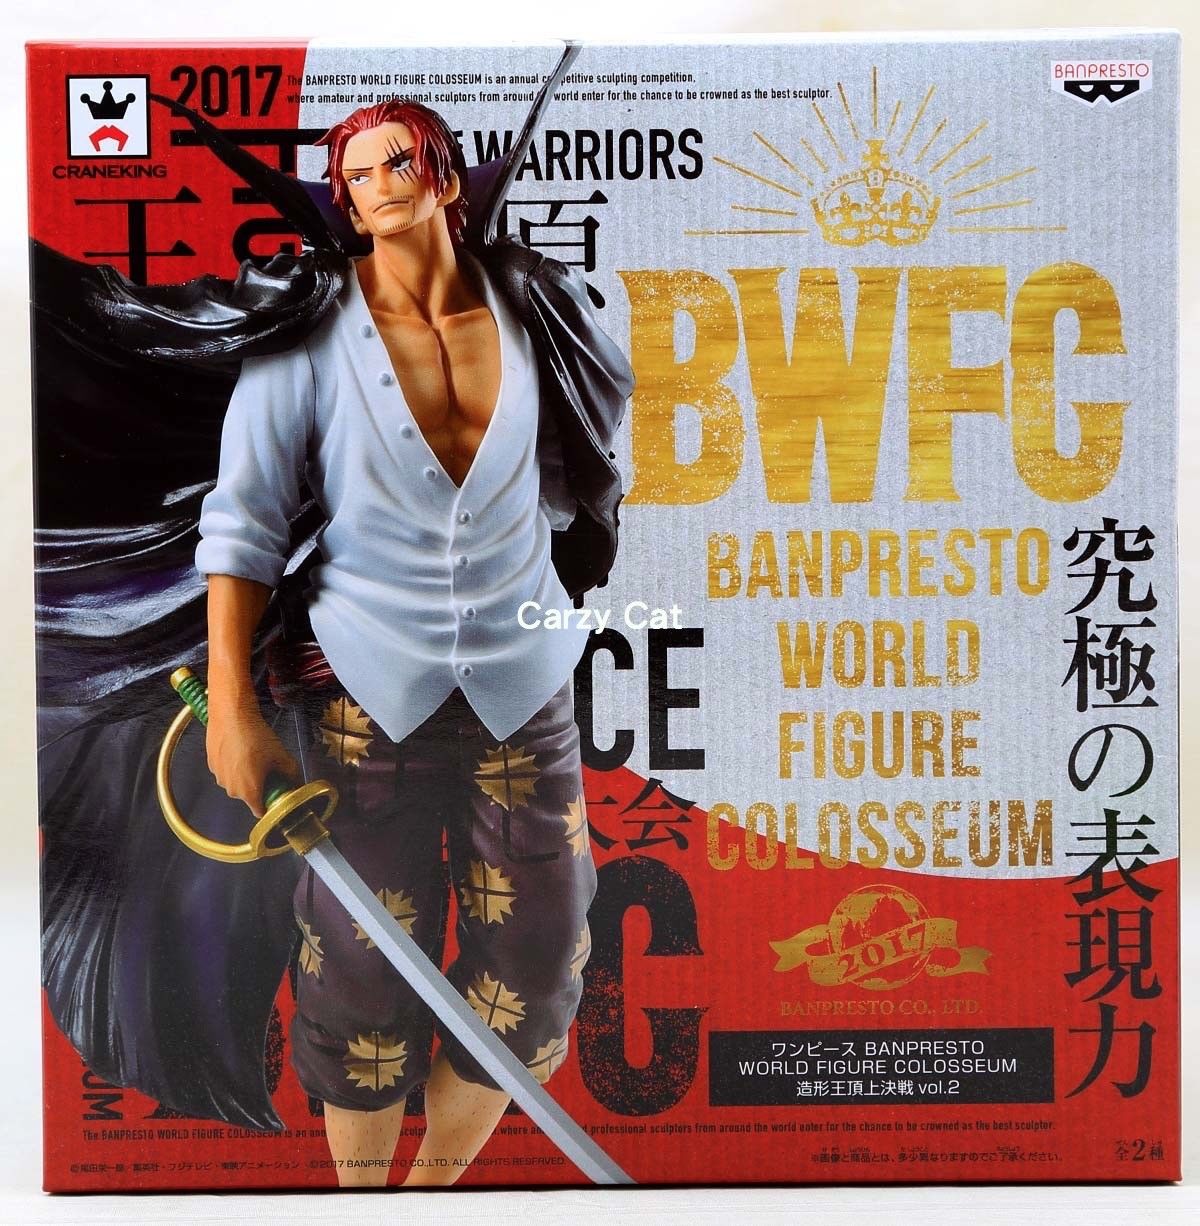 Shanks, Vol. 2 Champion, One Piece, World Figure Colosseum, Banpresto